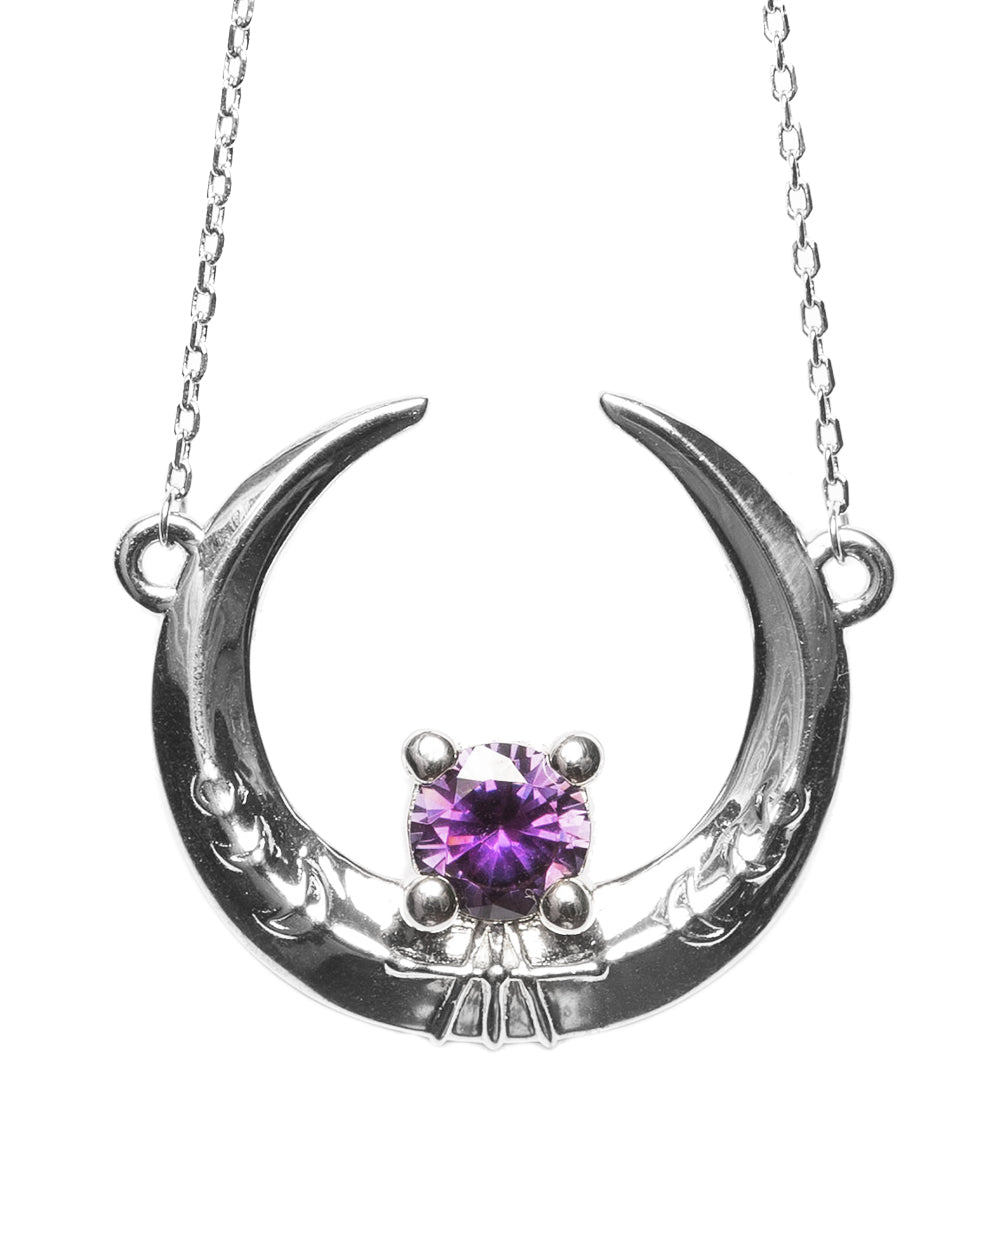 Eclipse Necklace in Mirror Steel